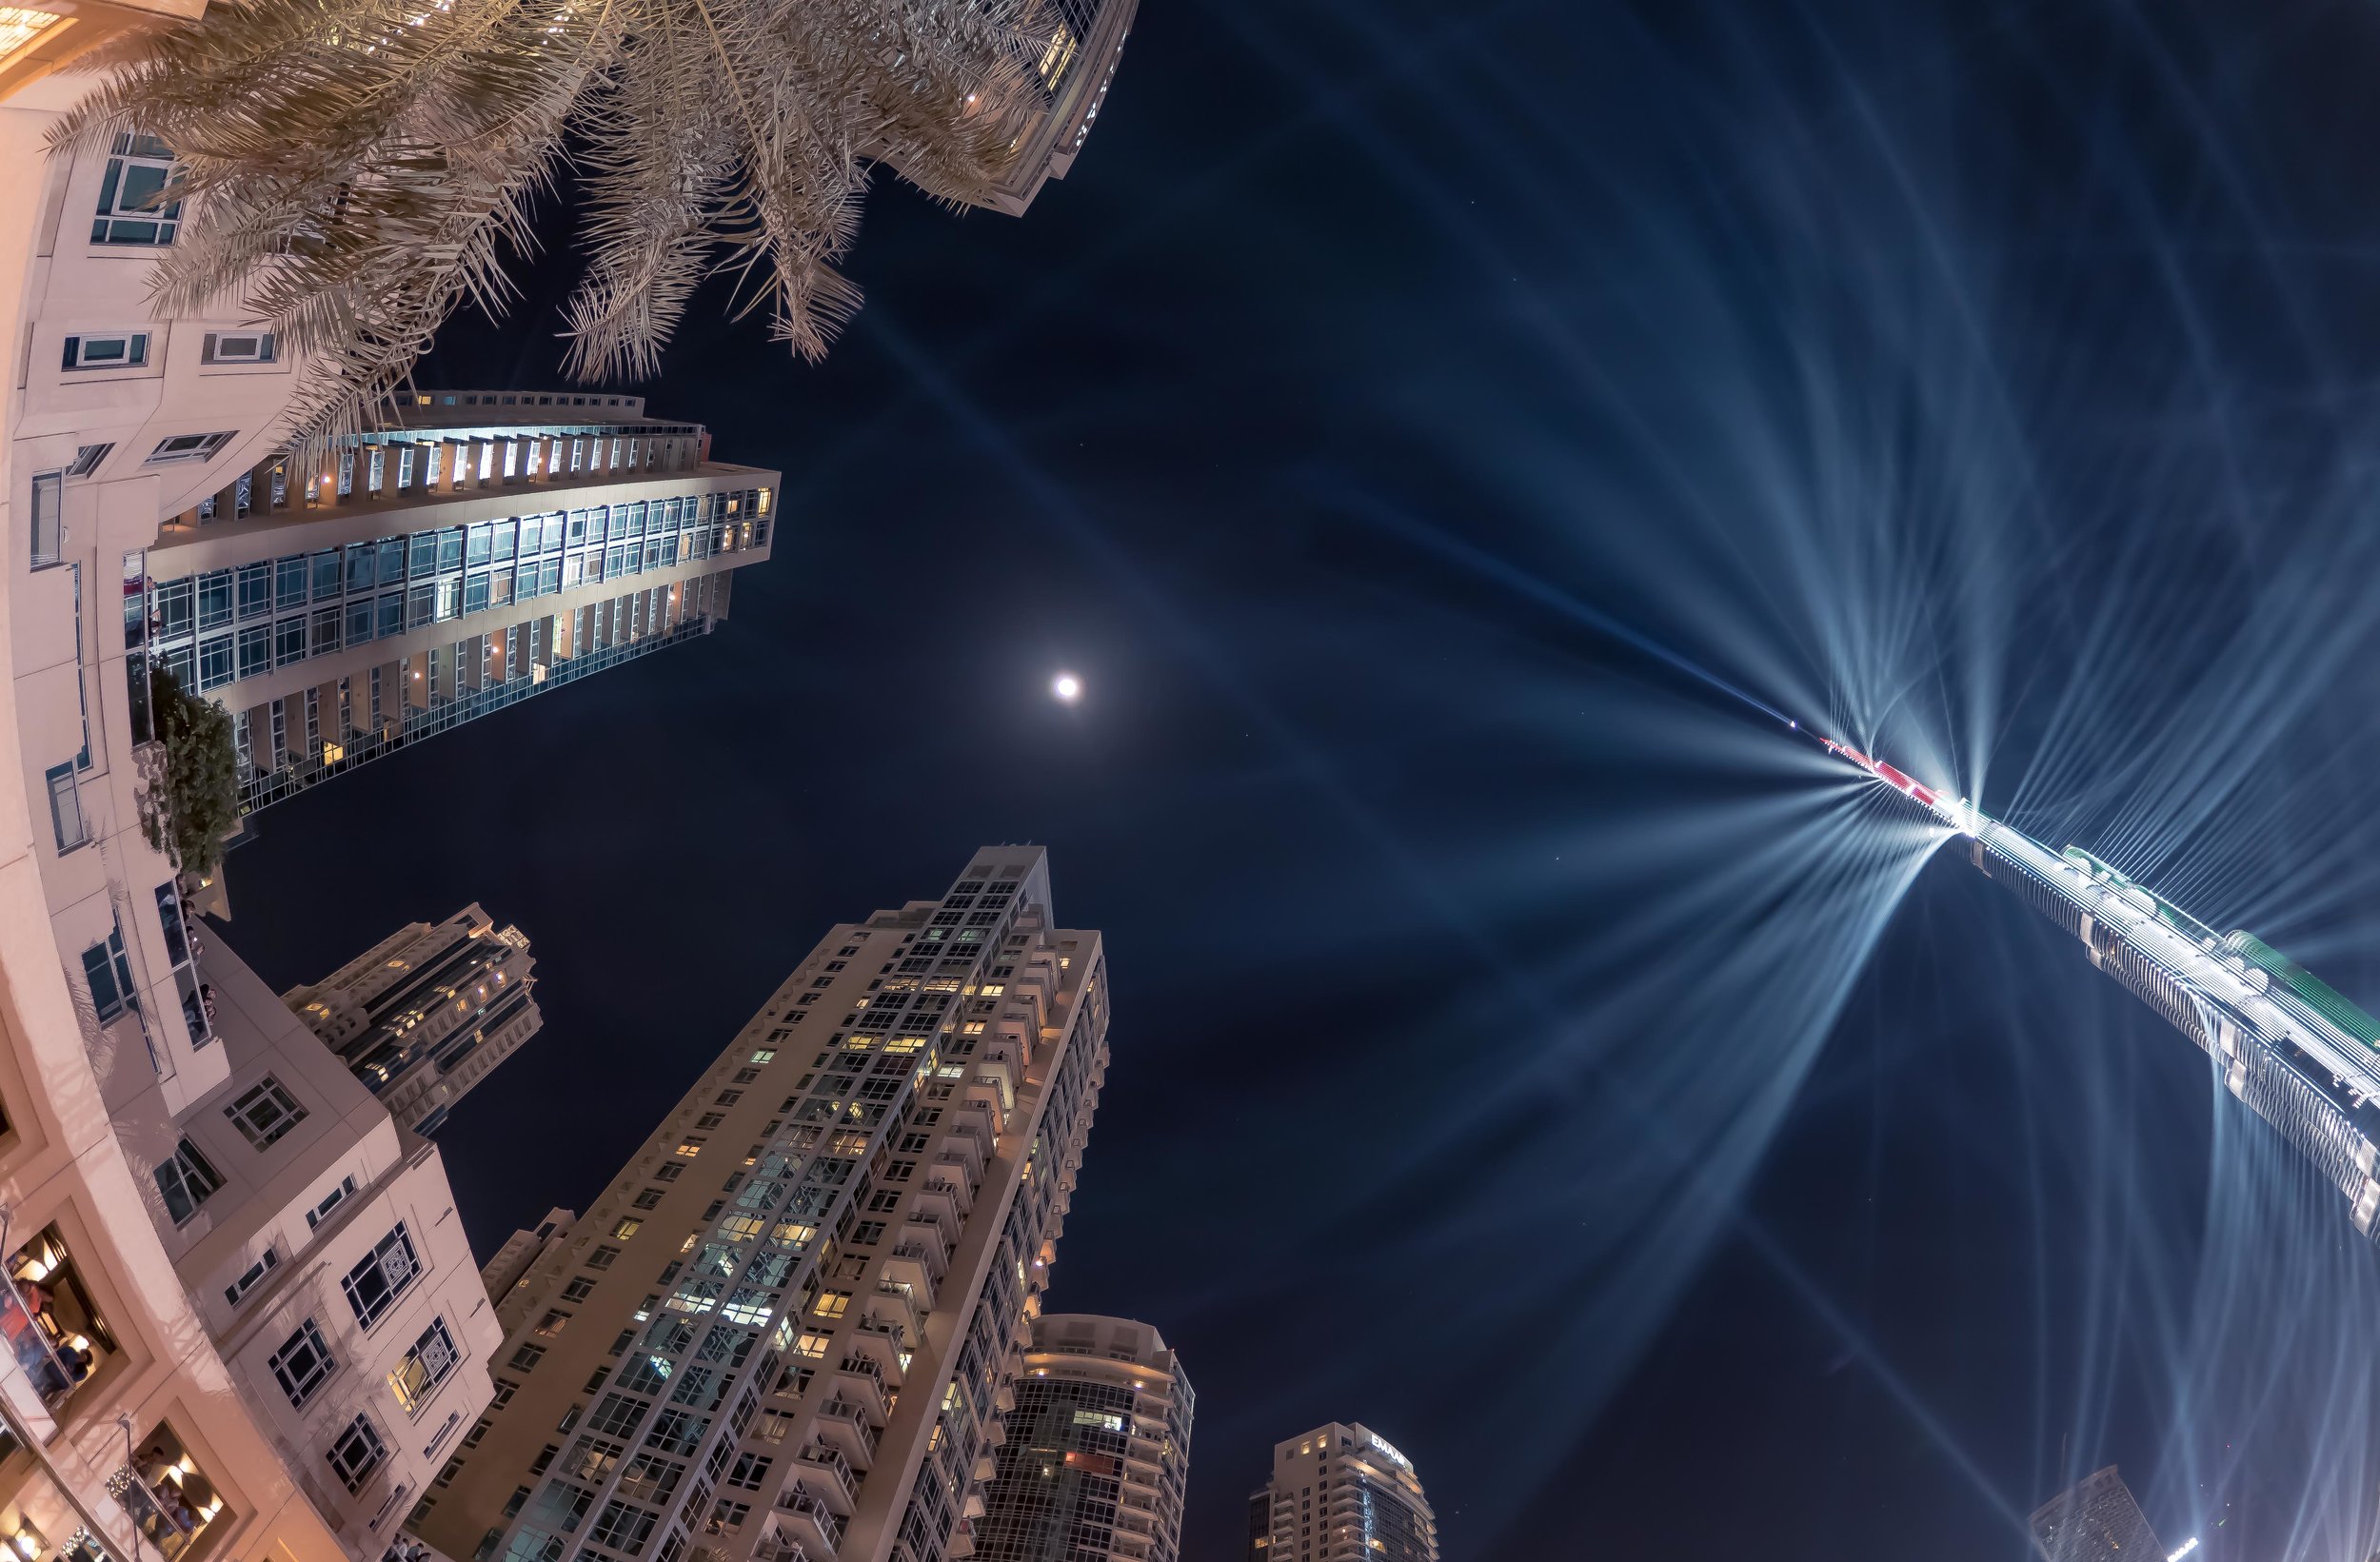  Downtown Dubai - LightUp2018 